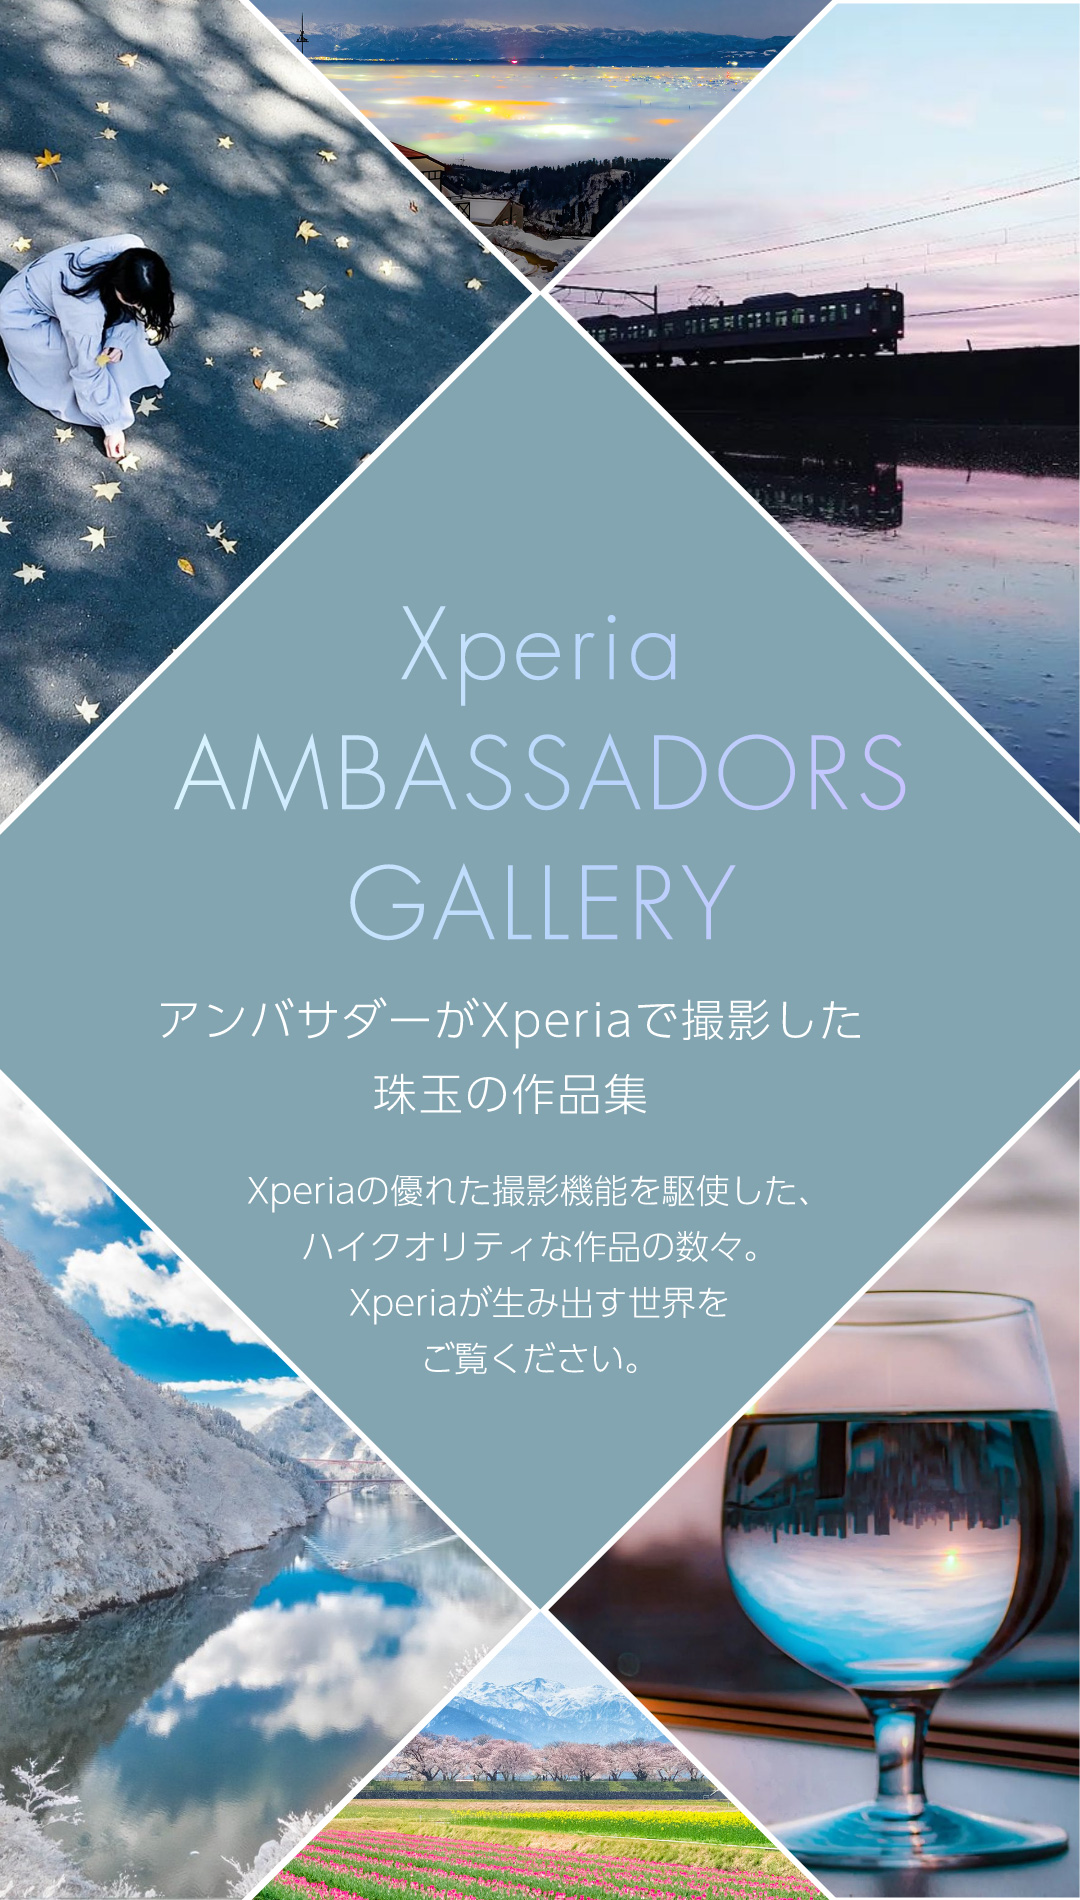 Xperia AMBASSADORS GALLERY アンバサダーがXperiaで撮影した珠玉の作品集 Xperiaの優れた撮影機能を駆使した、ハイクオリティな作品の数々。Xperiaが生み出す世界をご覧ください。